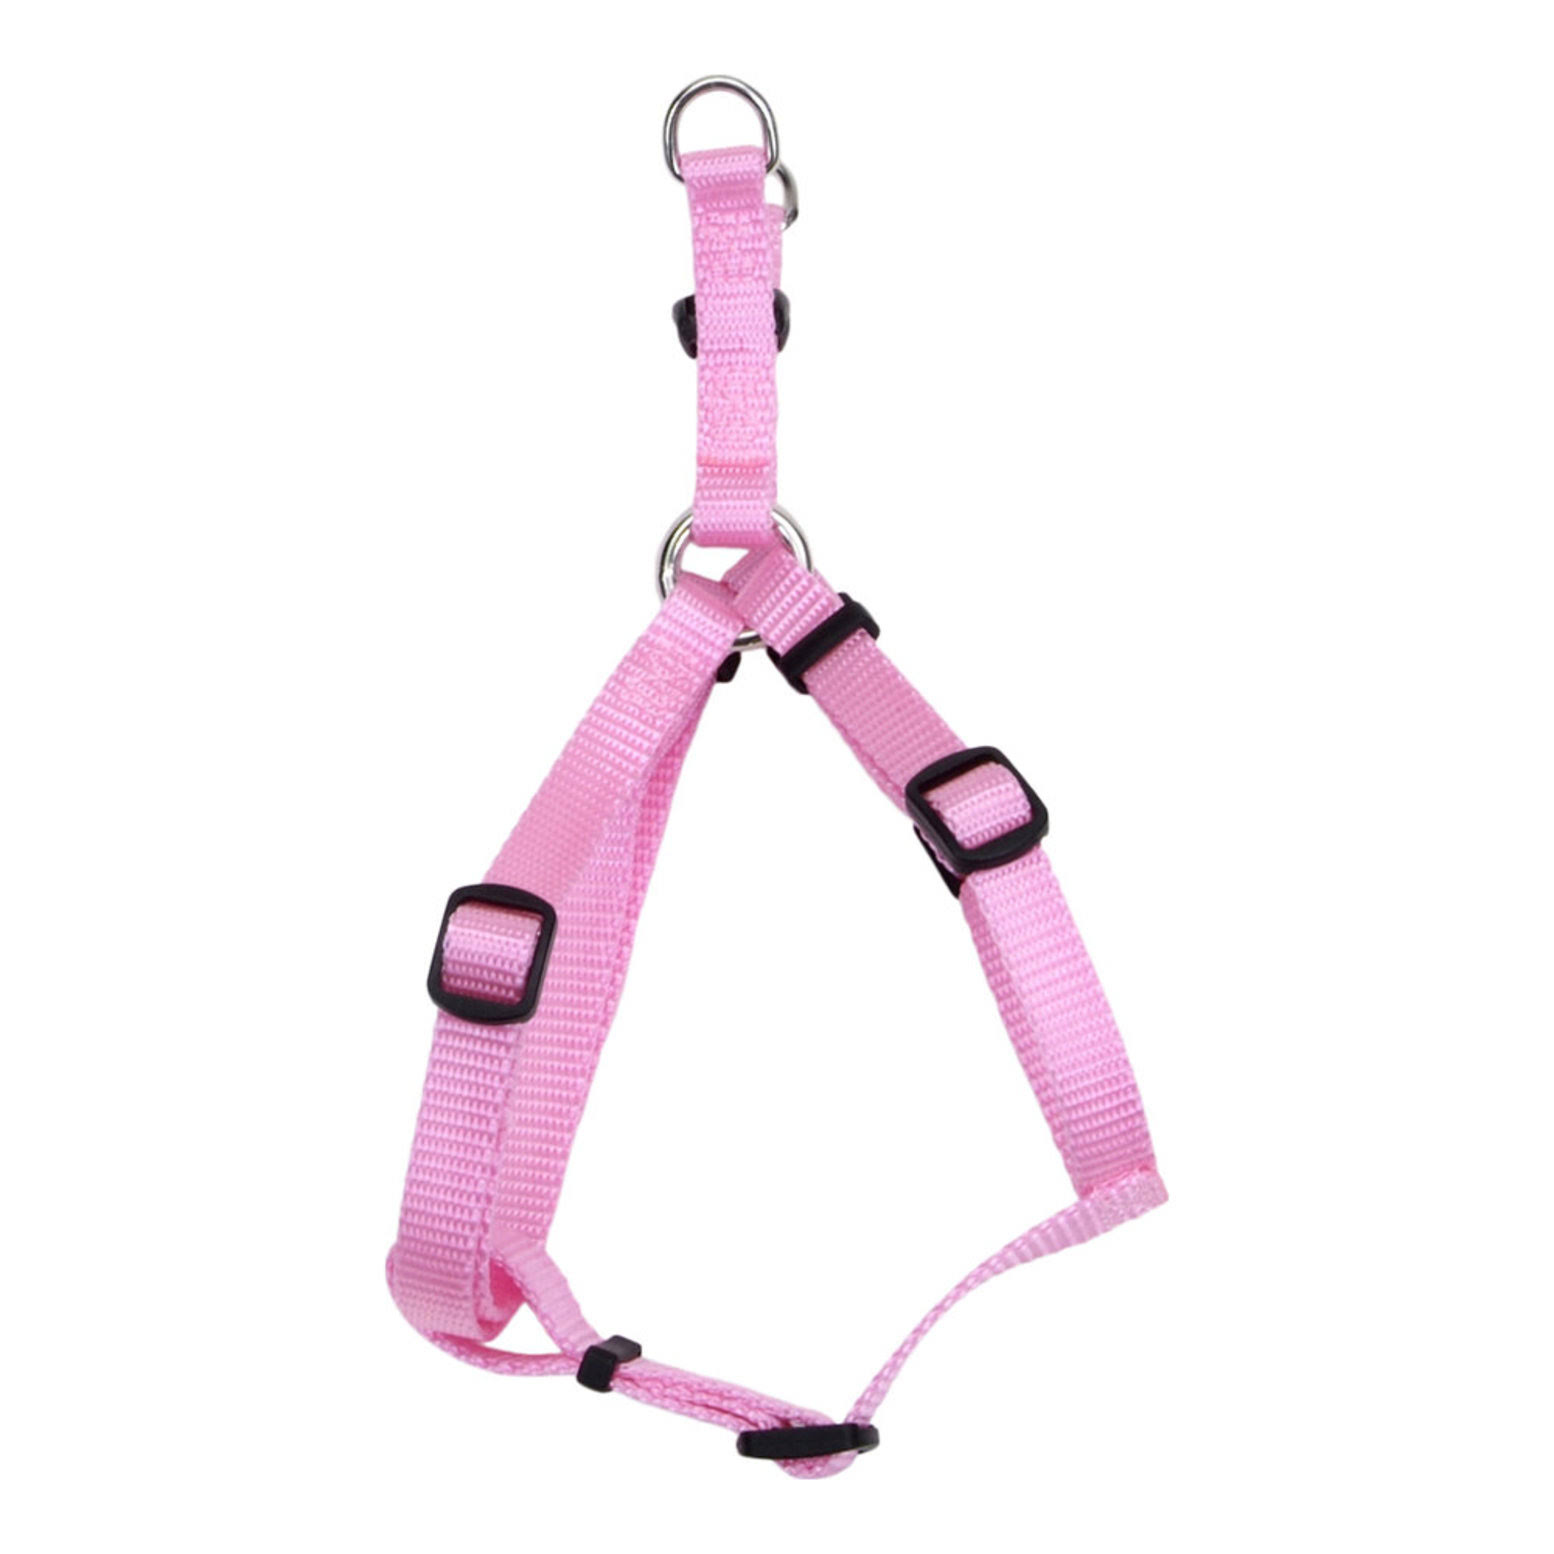 Coastal Pet Products Comfort Wrap Nylon Adjustable Dog Harness - Bright Pink